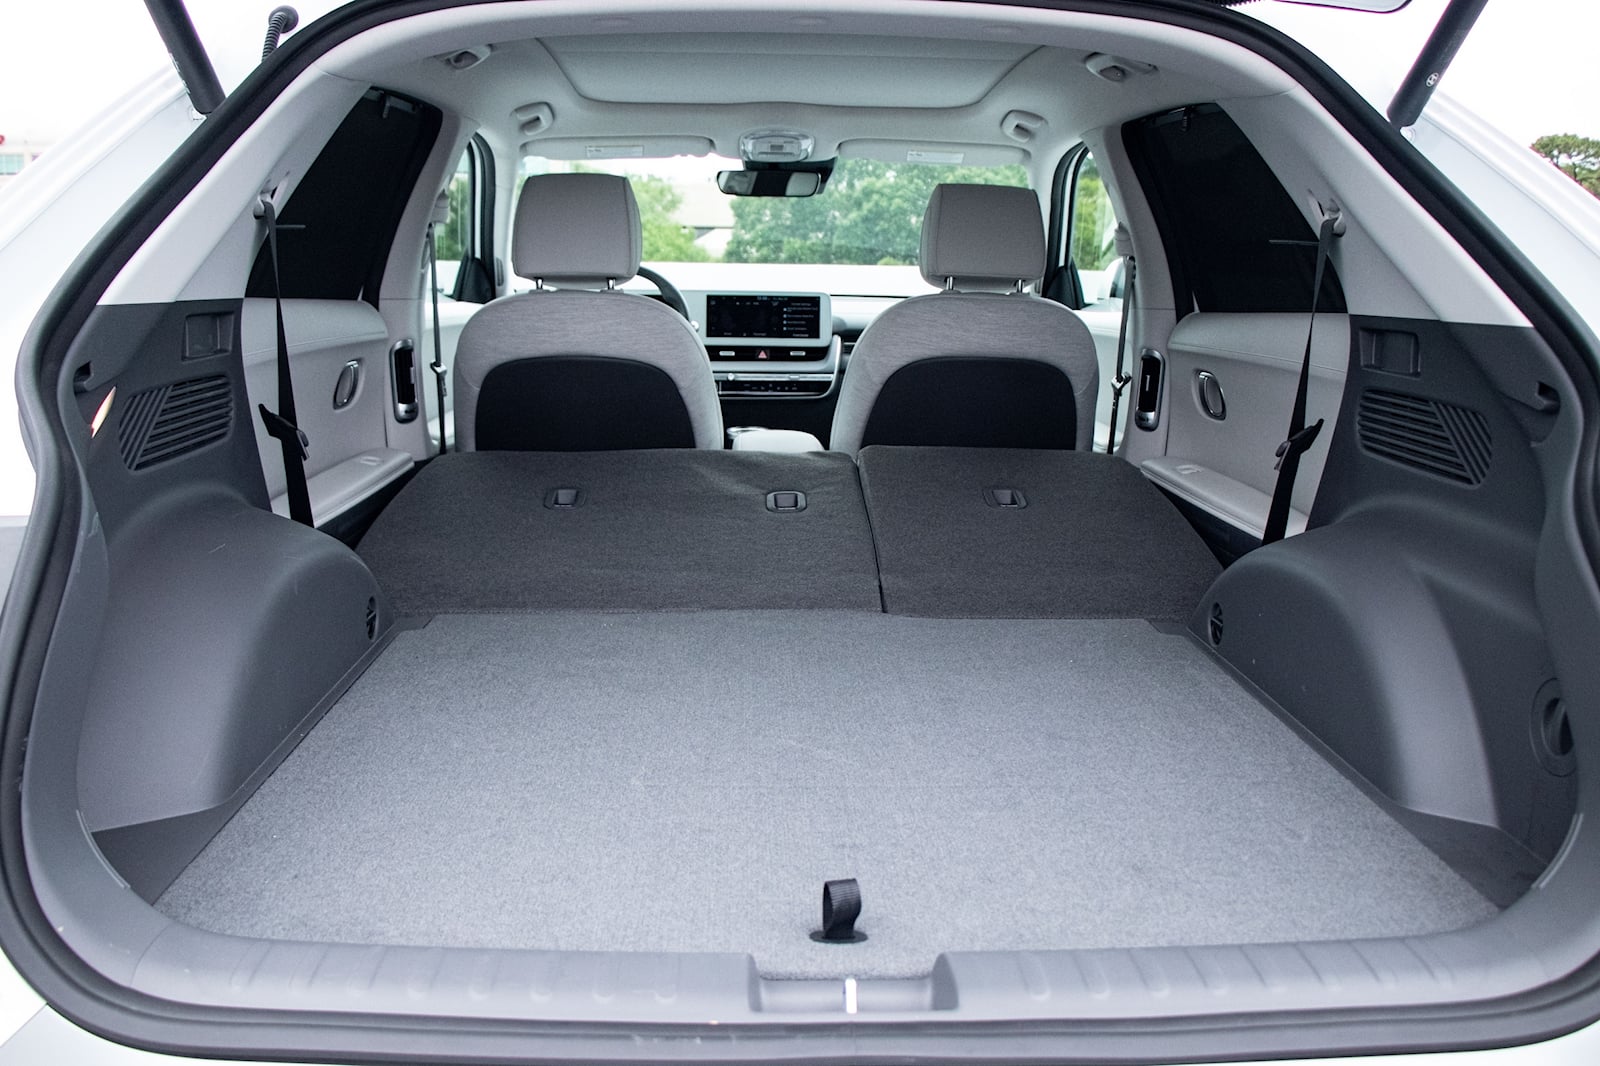 2023 Hyundai Ioniq 5 Interior Dimensions Seating, Cargo Space & Trunk